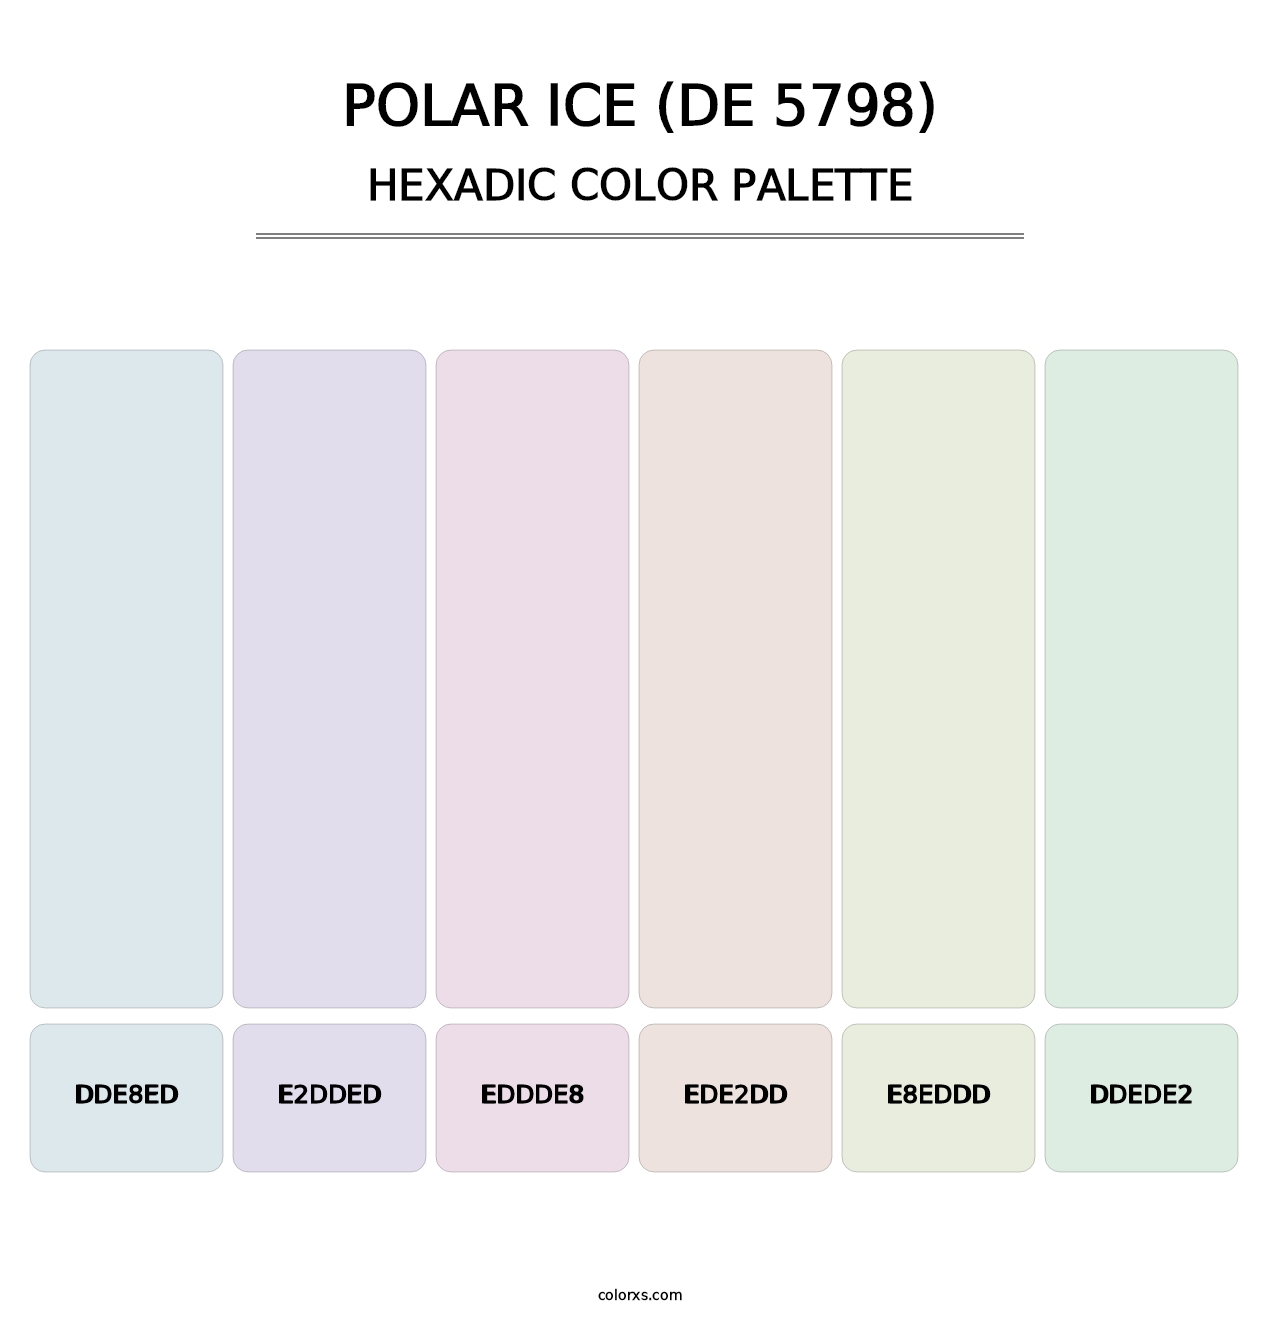 Polar Ice (DE 5798) - Hexadic Color Palette